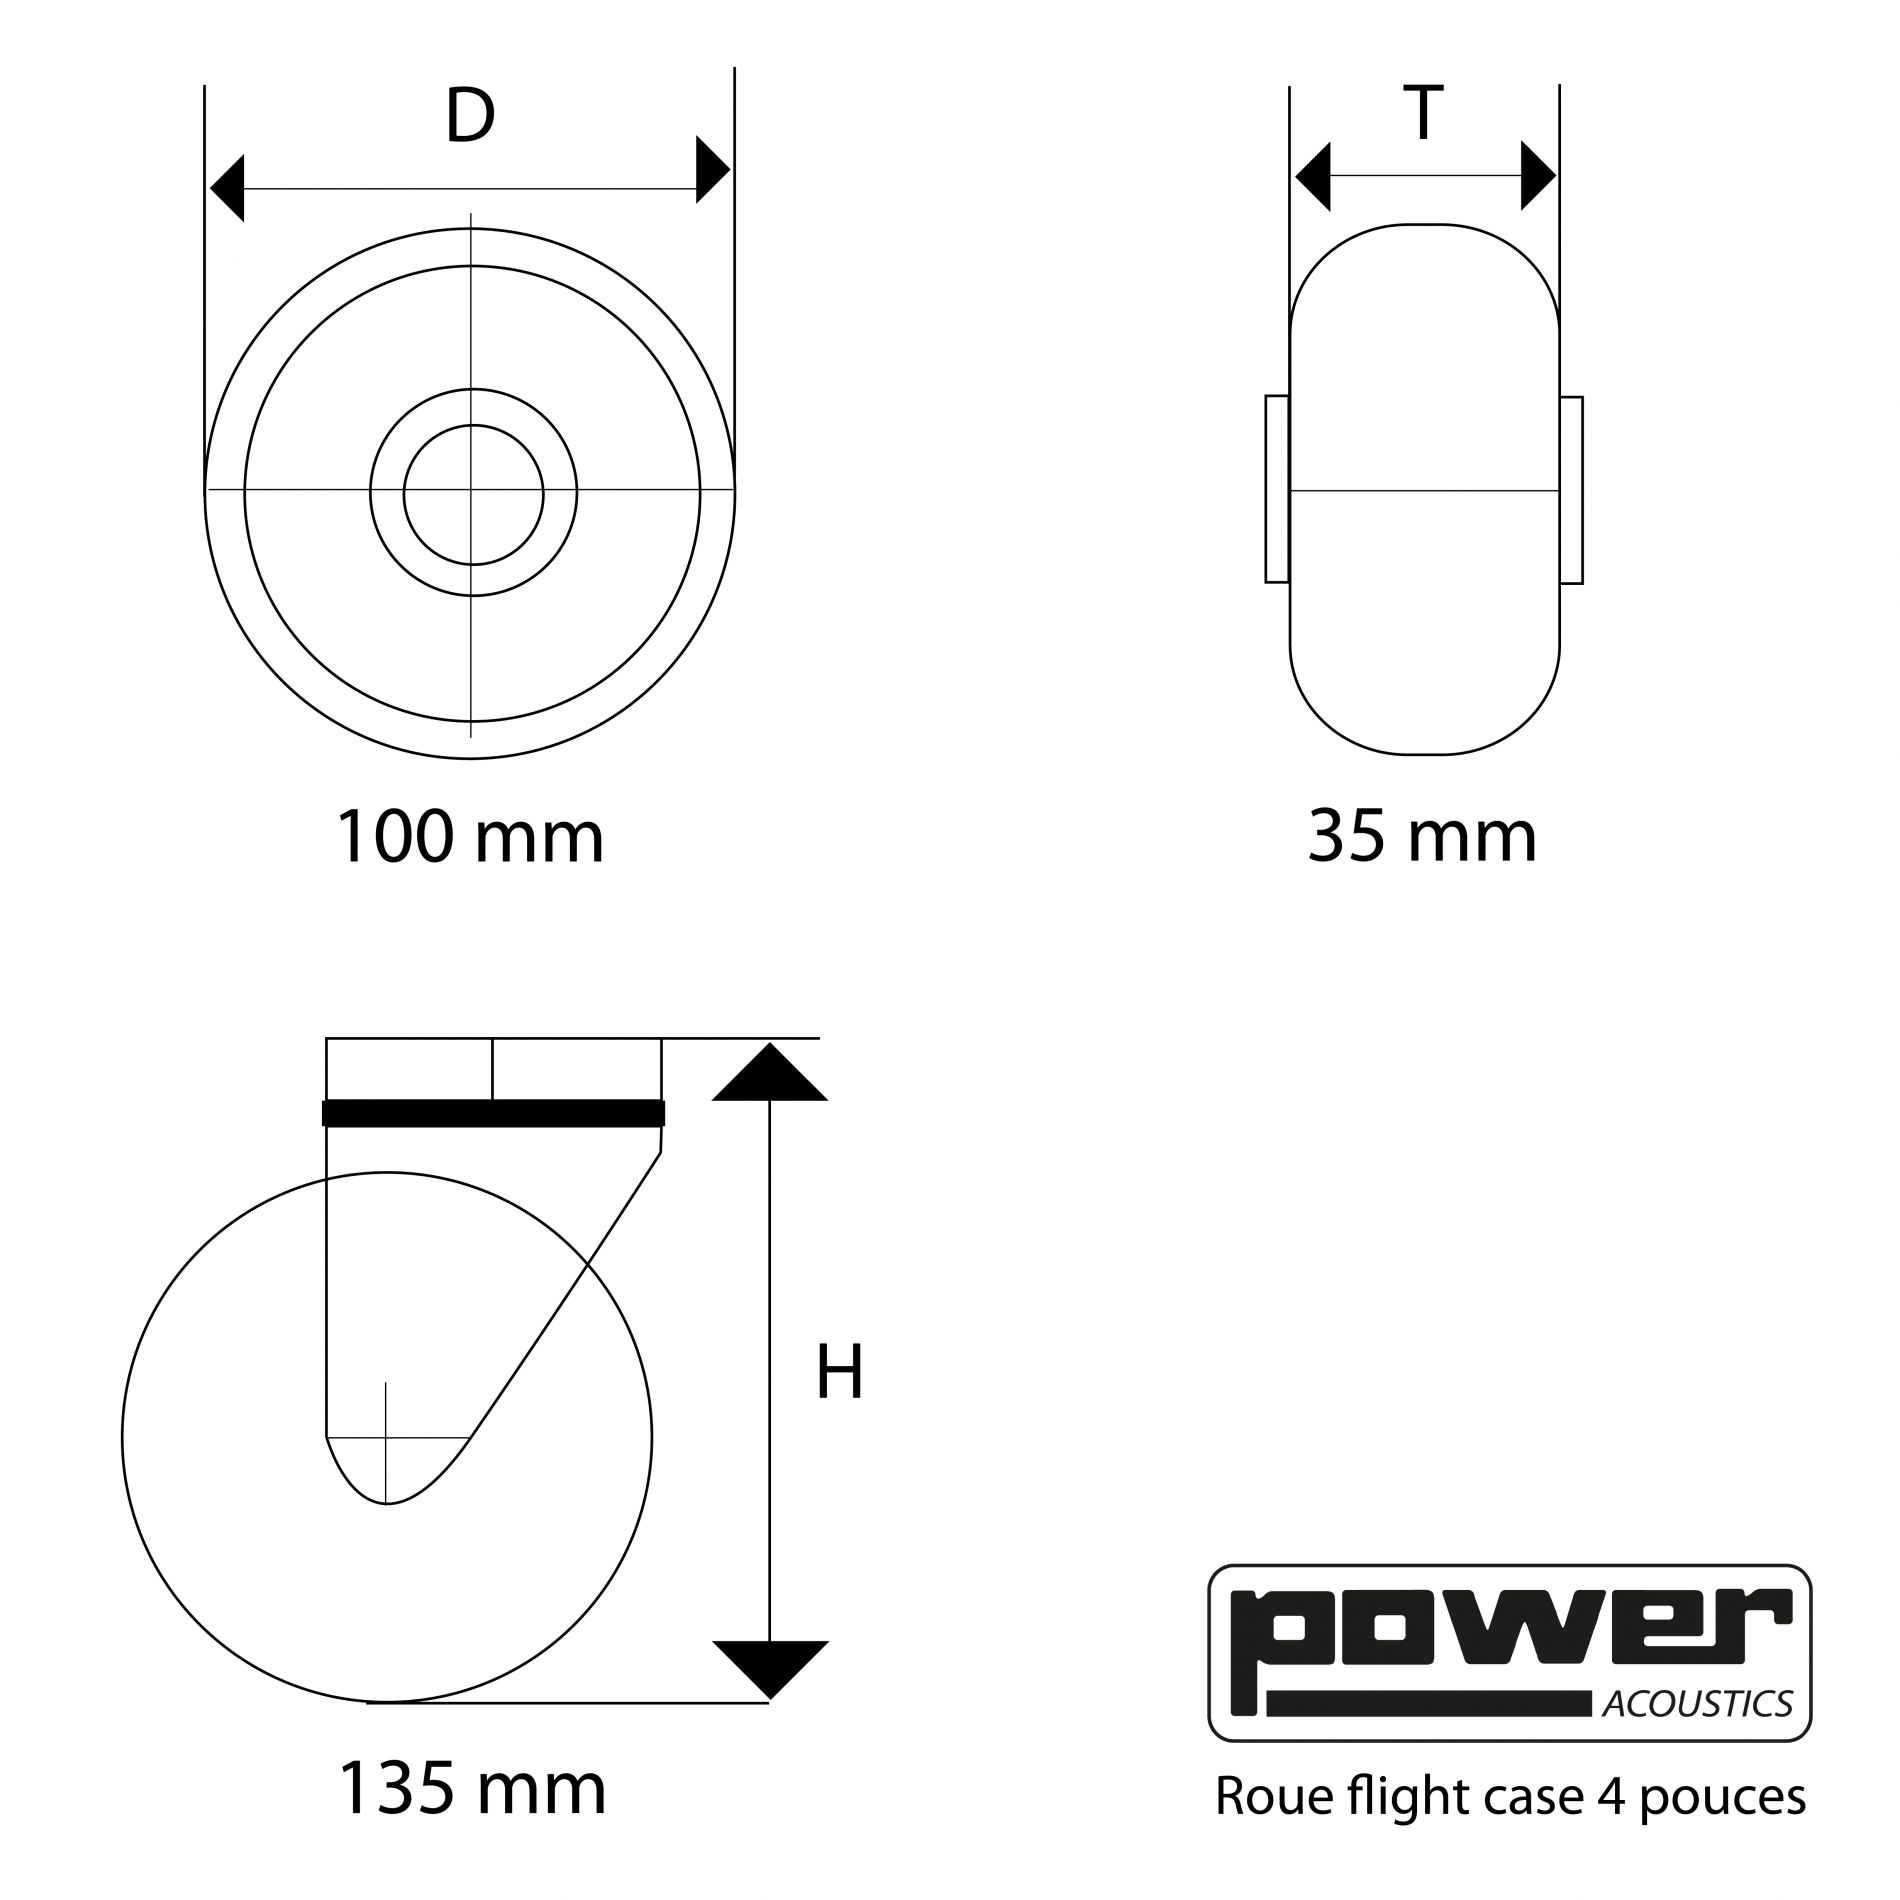 Power Acoustics Roue Flight Case 4 Pouces - - Flight case & koffer voor lichten - Variation 2